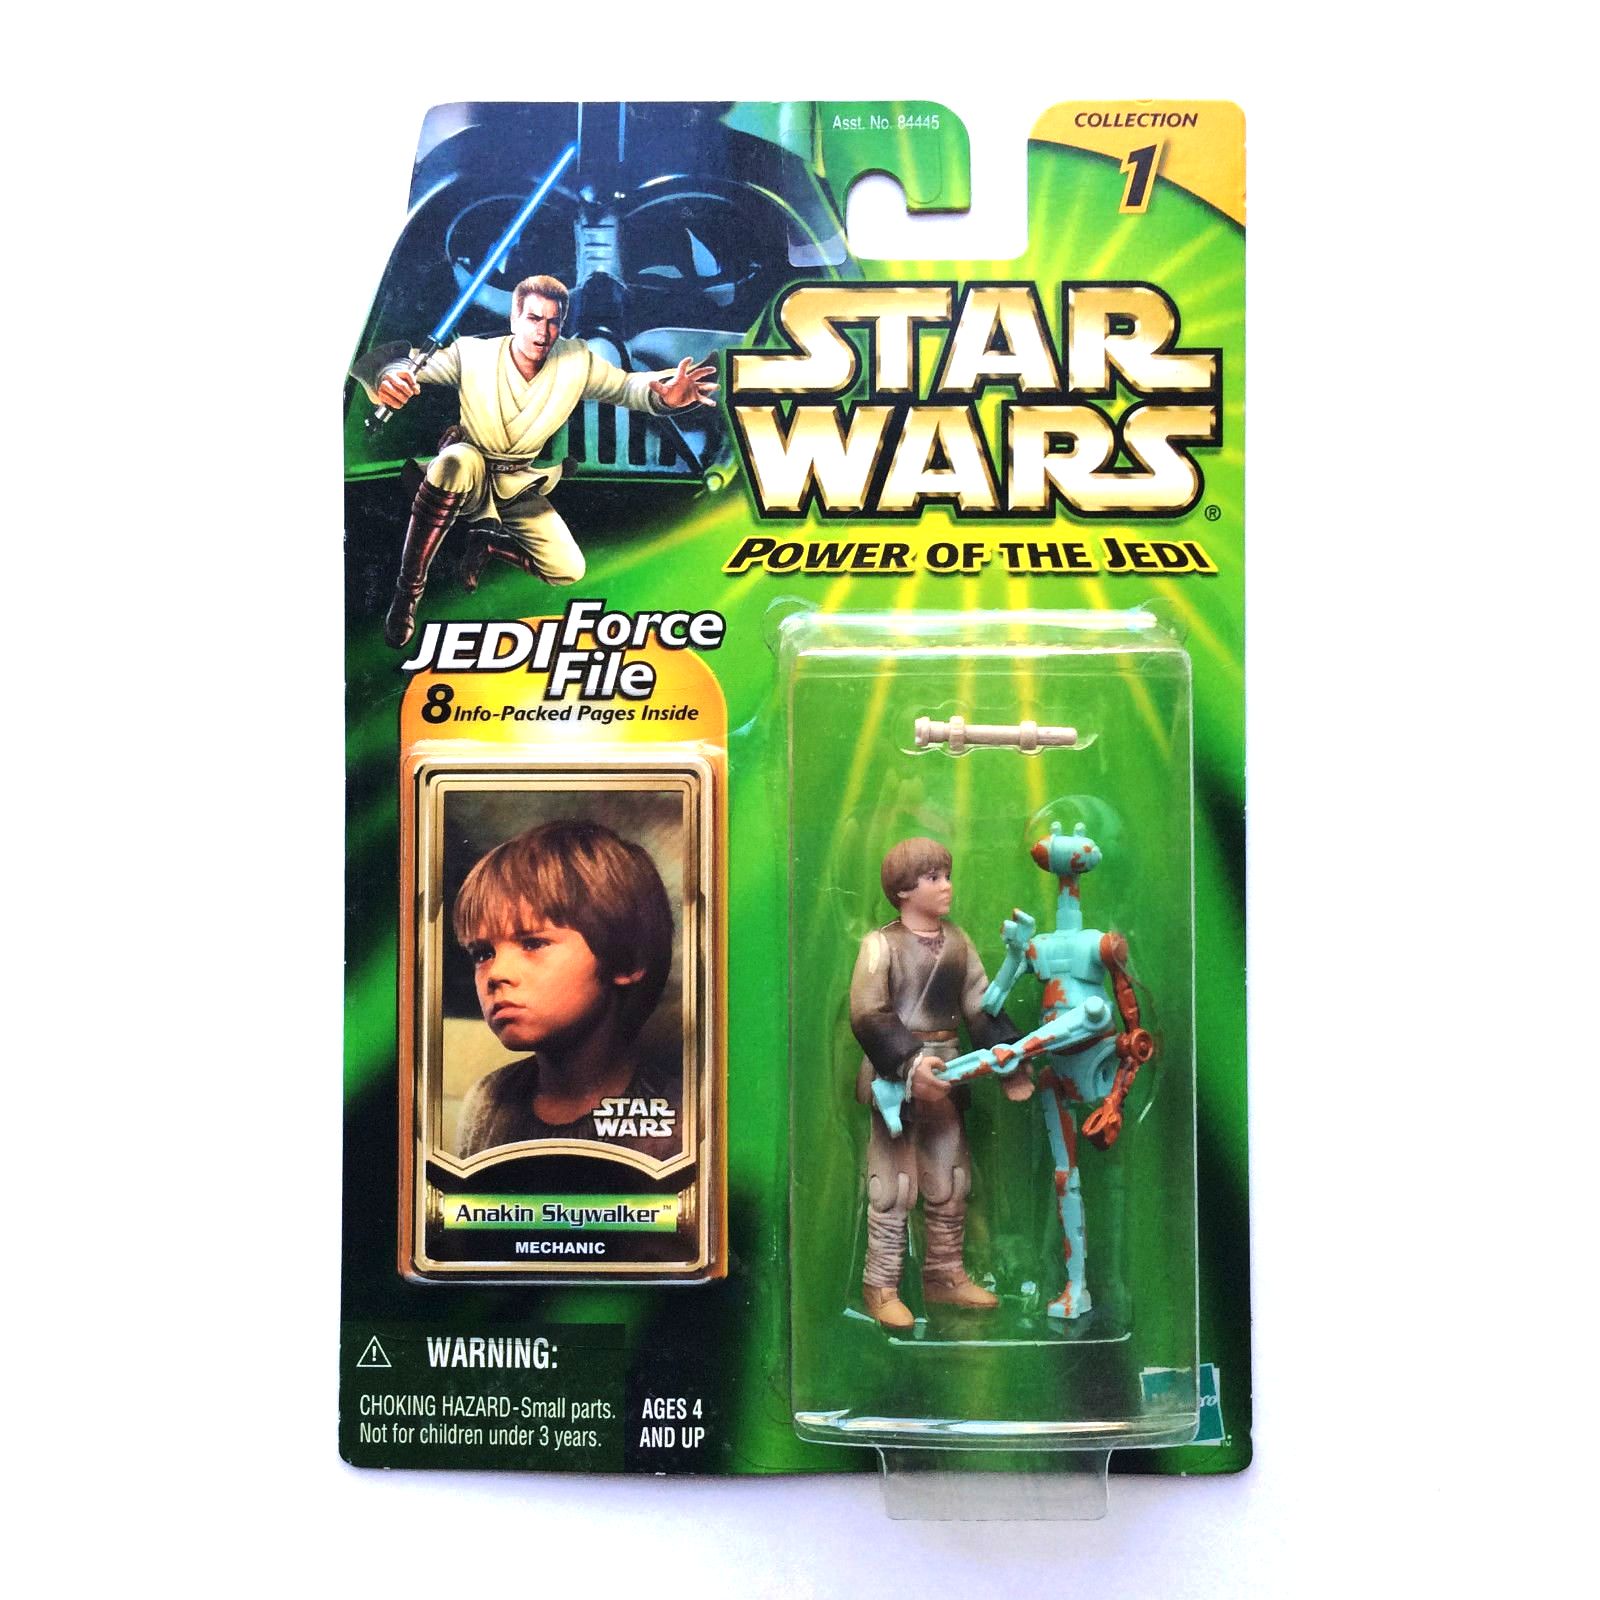 POTJ Anakin Skywalker Mechanic OVP NEU Star Wars Hasbro 2000 Collection 1